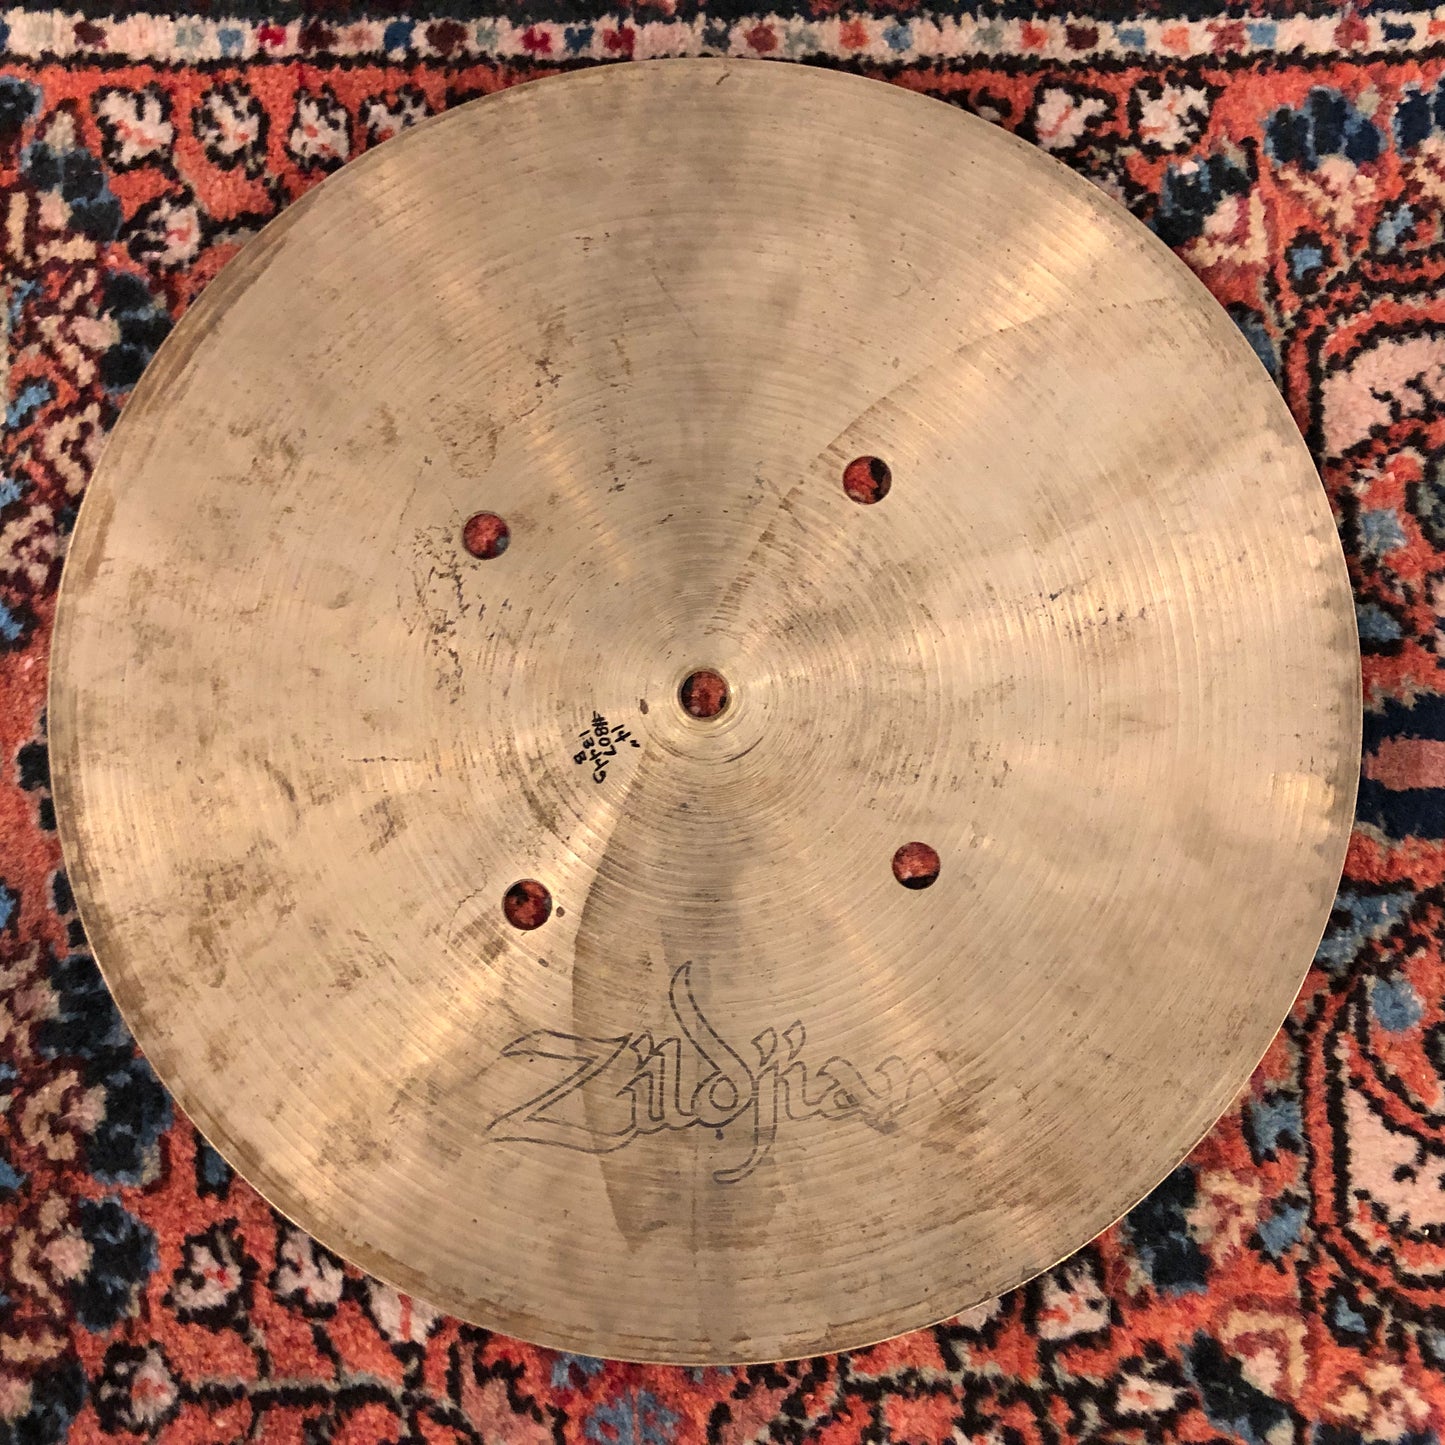 14" Zildjian A 1970s/1980s Quick Beat Hi-Hat Cymbal Pair 1170g/1344g #807